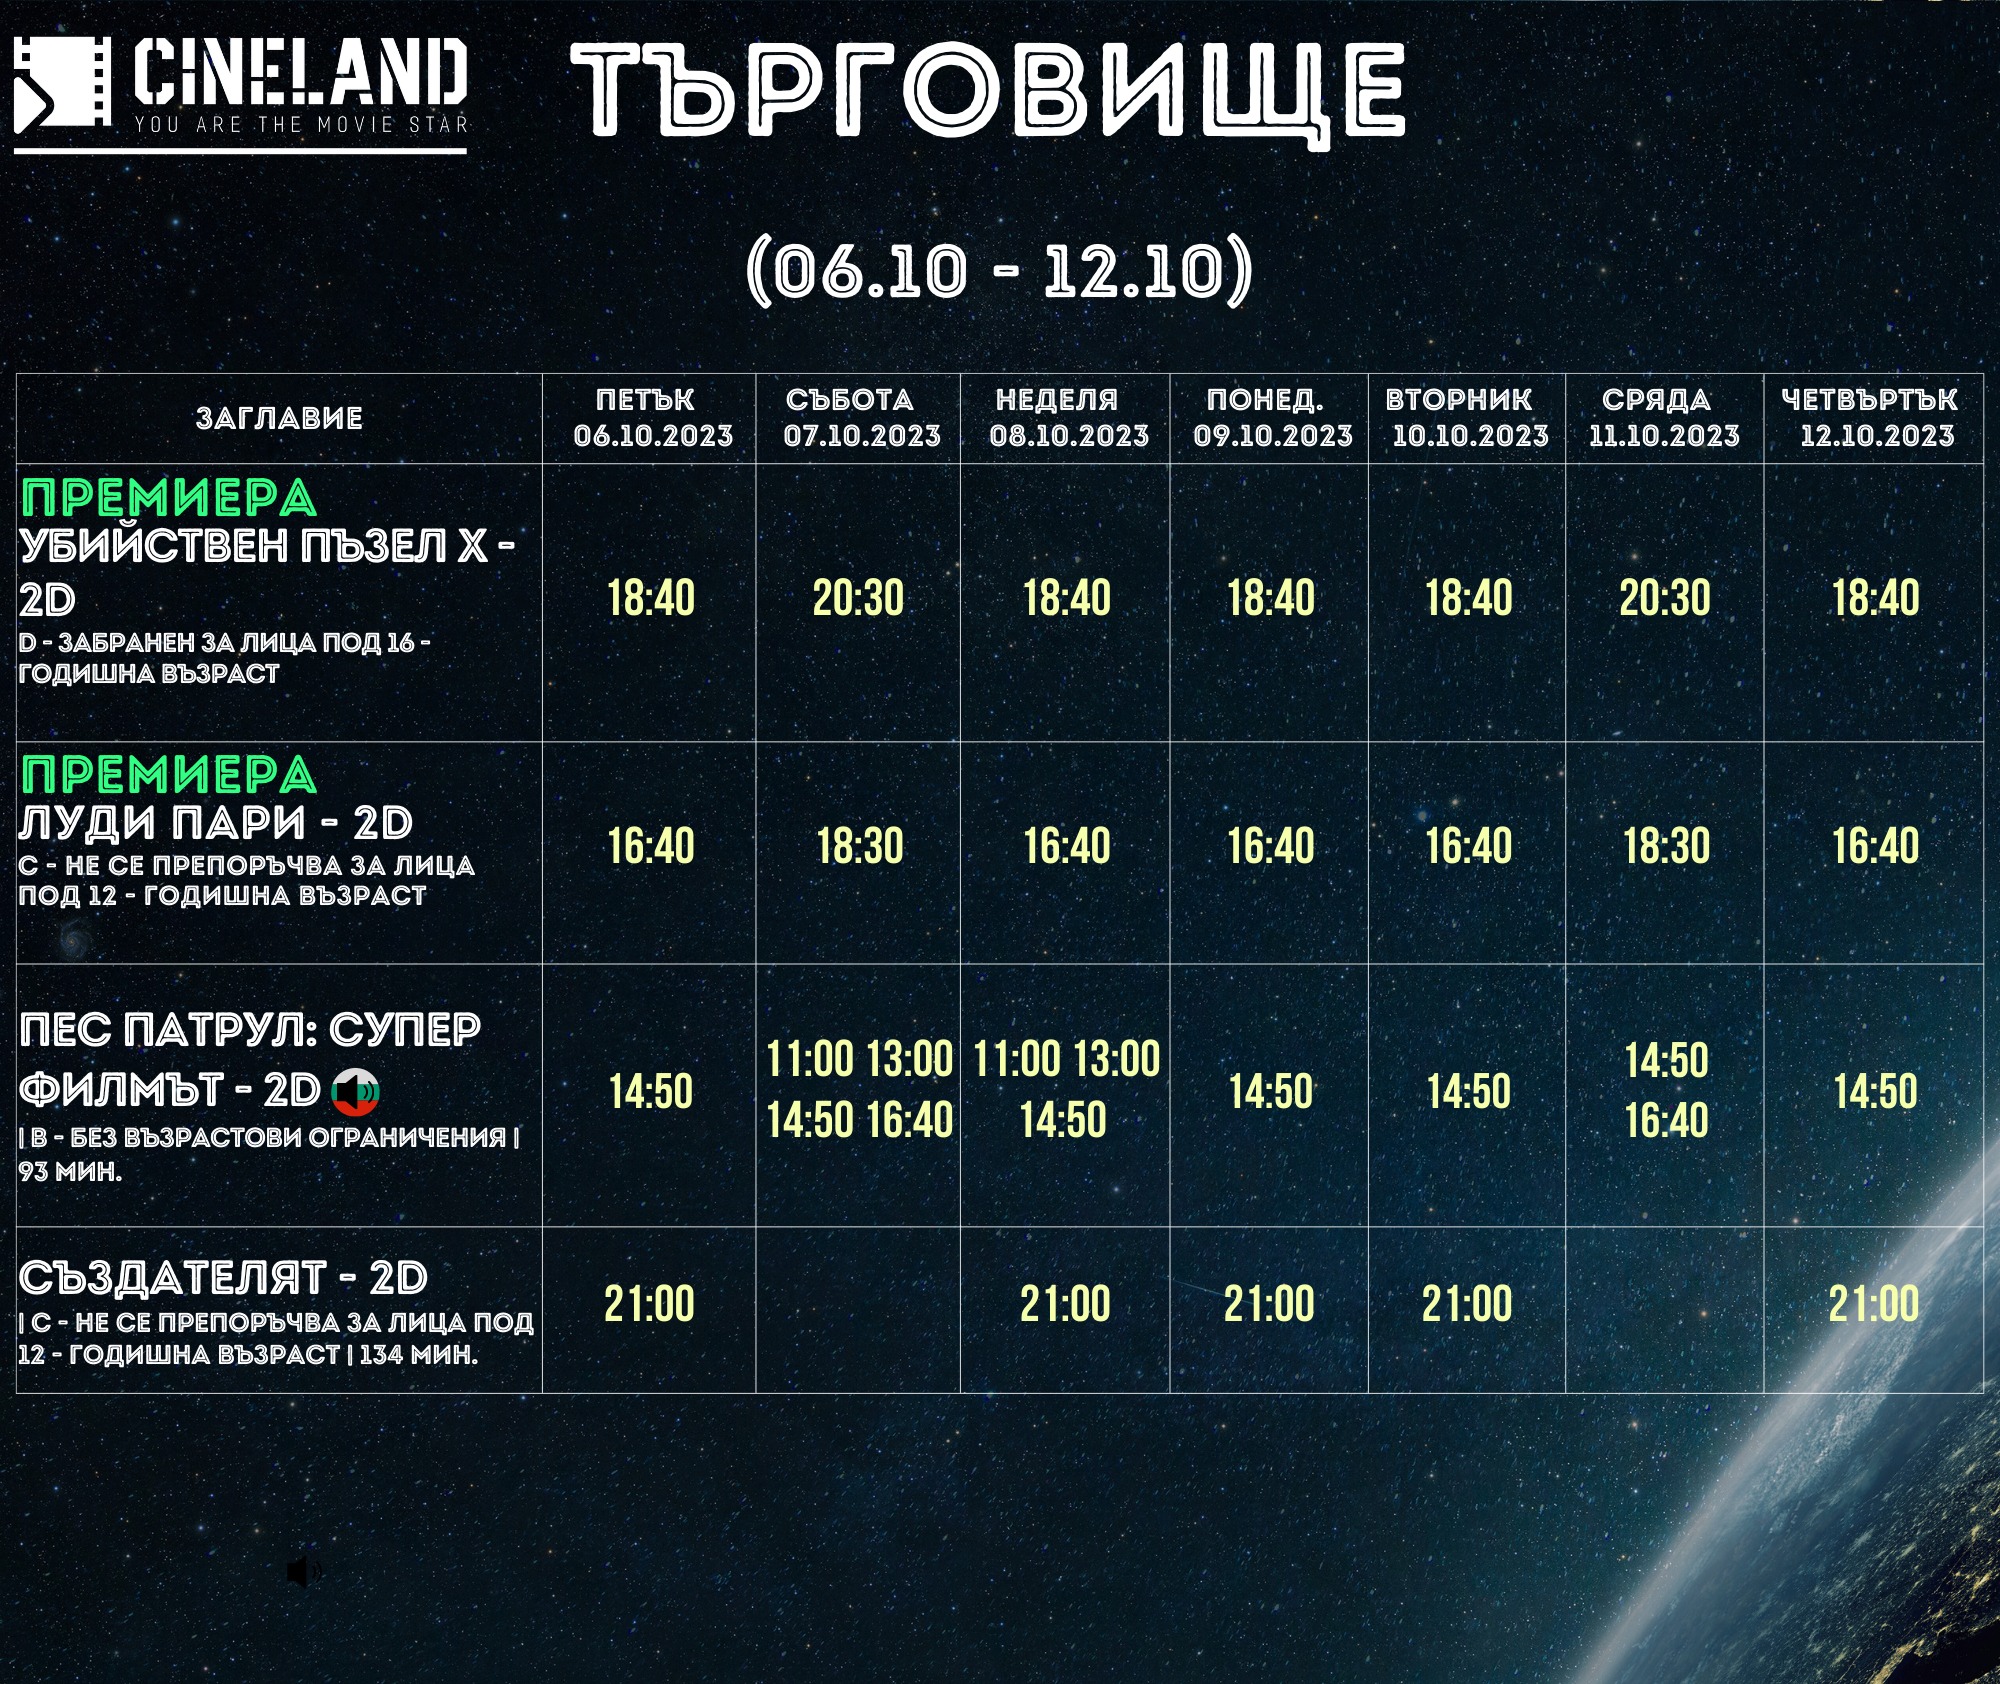 CineLand Cinemagic:      06-12.10.2023